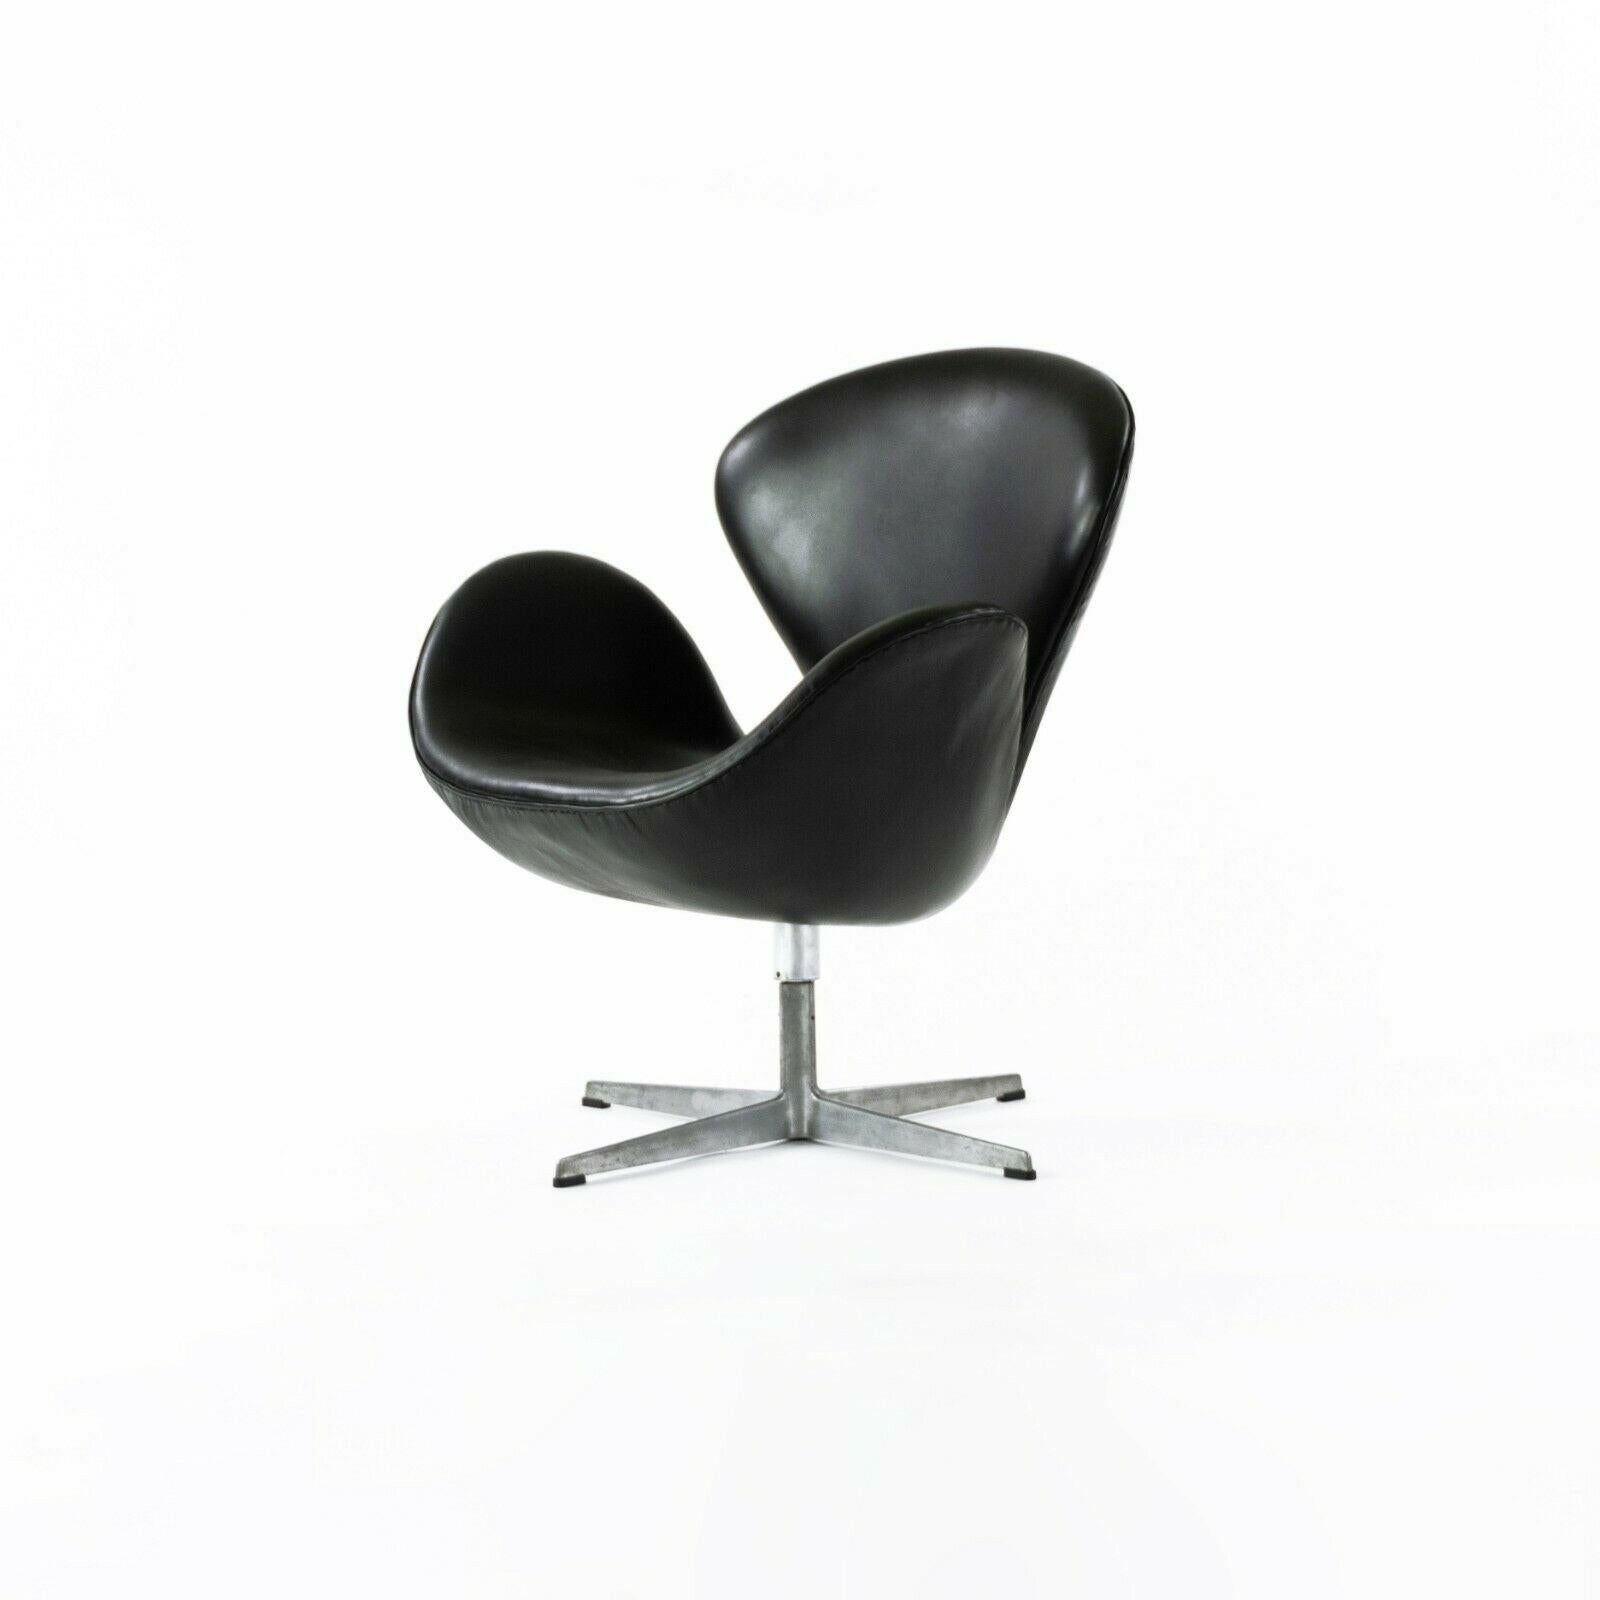 1960s Arne Jacobsen Swan Chair by Fritz Hansen of Denmark in Black Leather For Sale 1